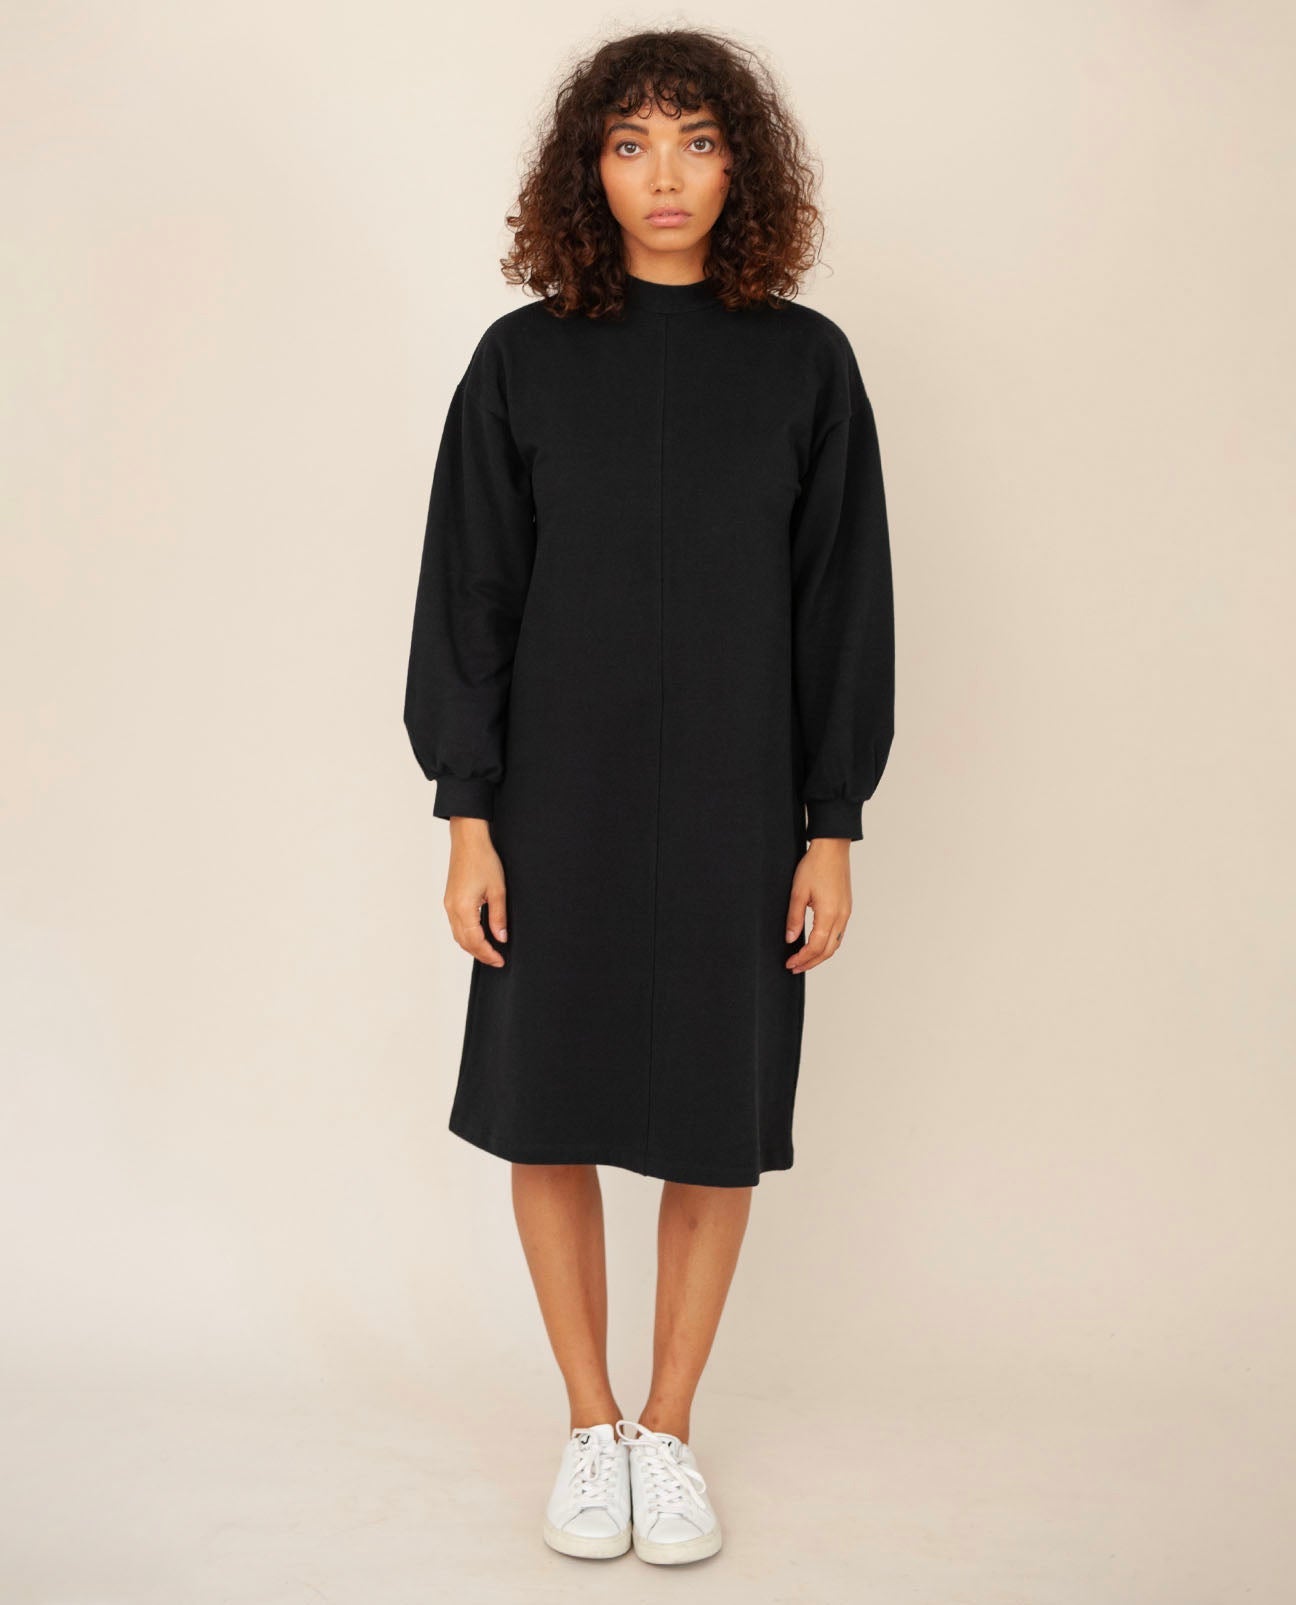 Marta Organic Cotton Dress in Black M